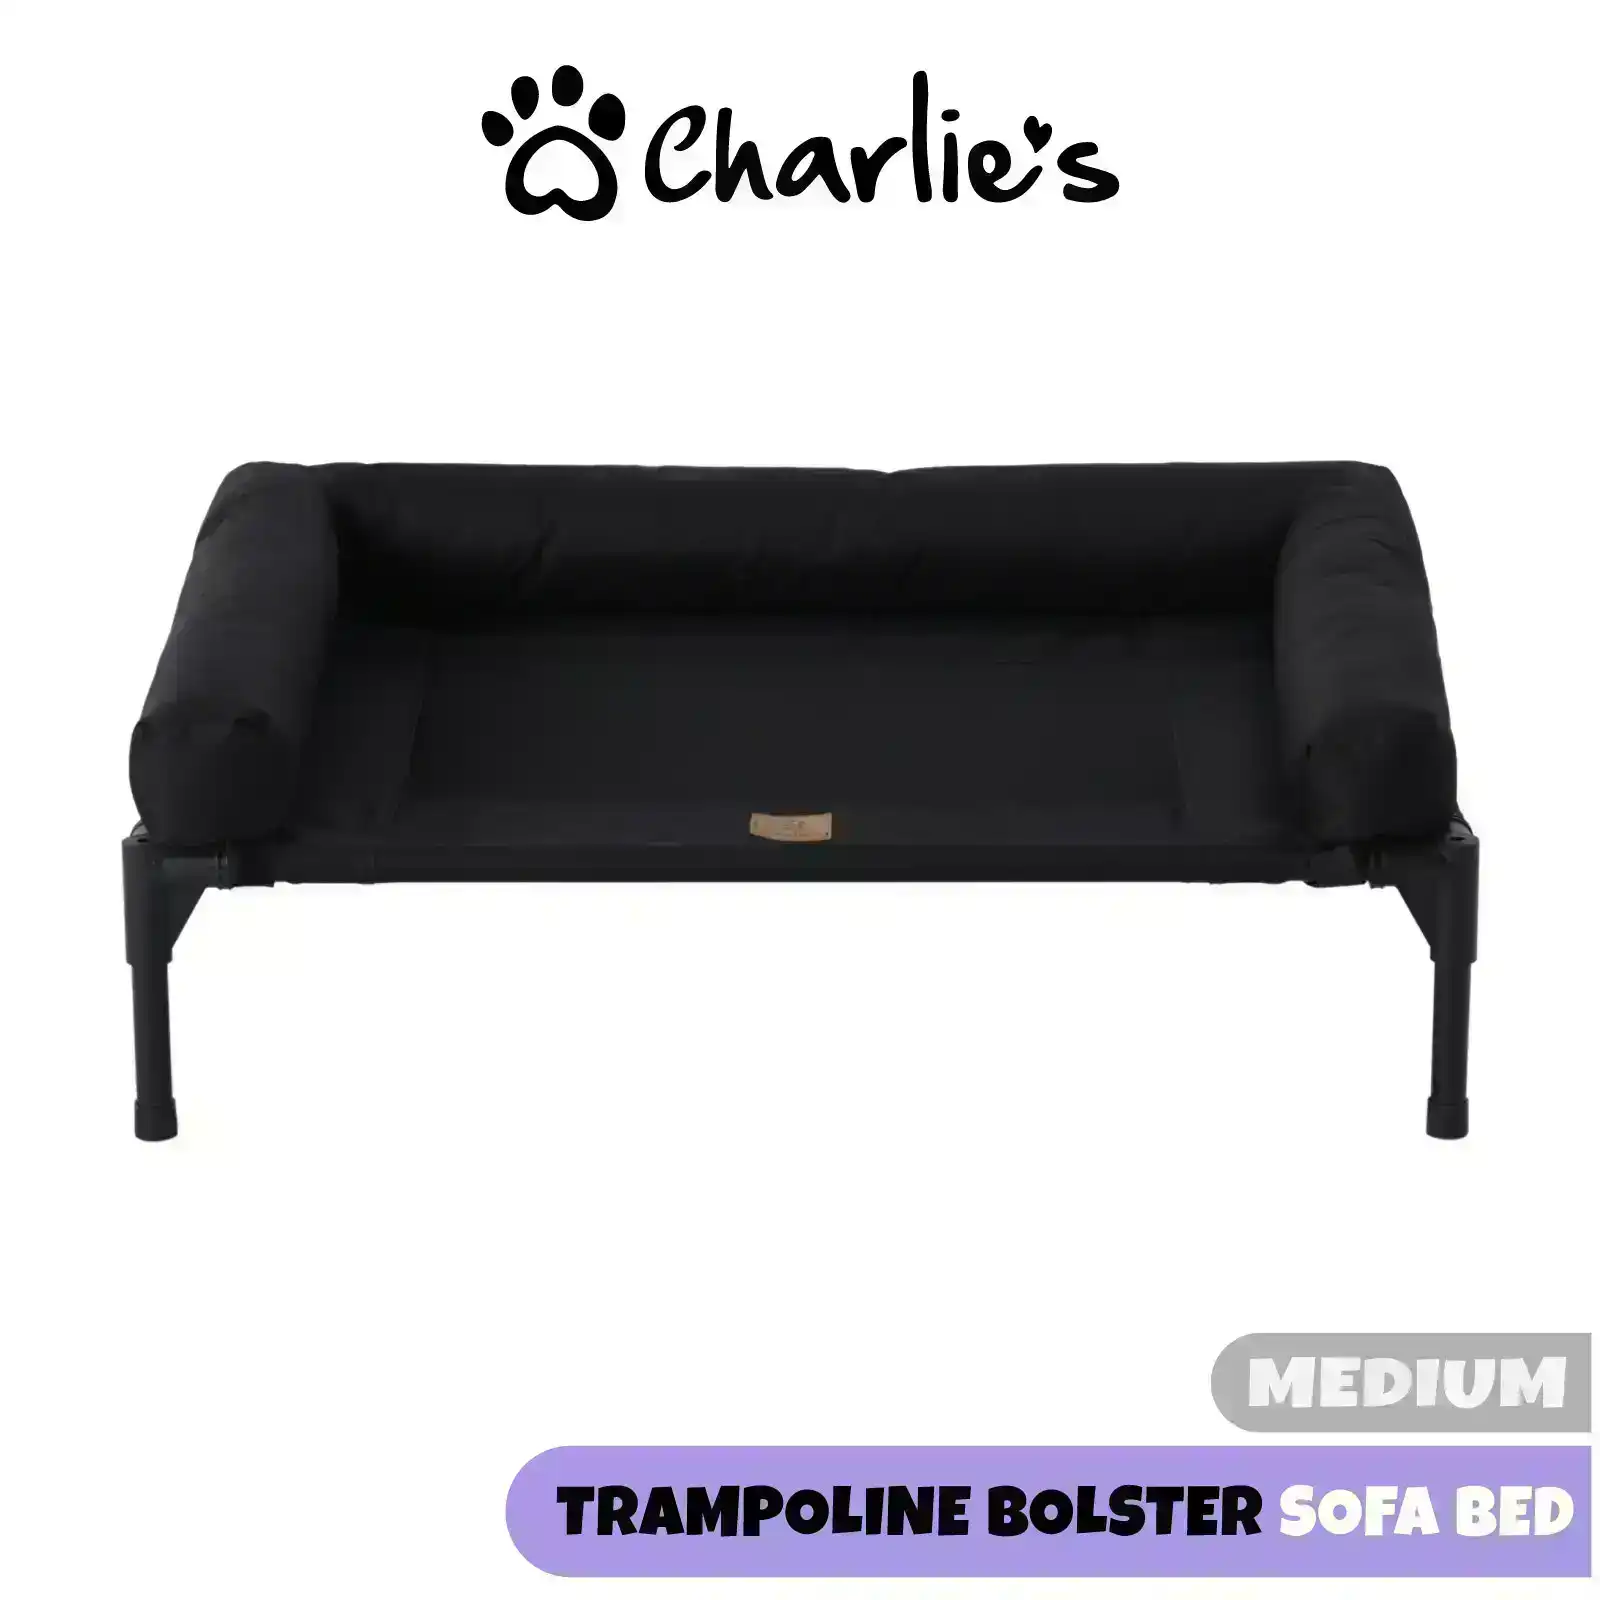 Charlie's Elevated Trampoline Bolster Sofa Dog Bed Black Medium